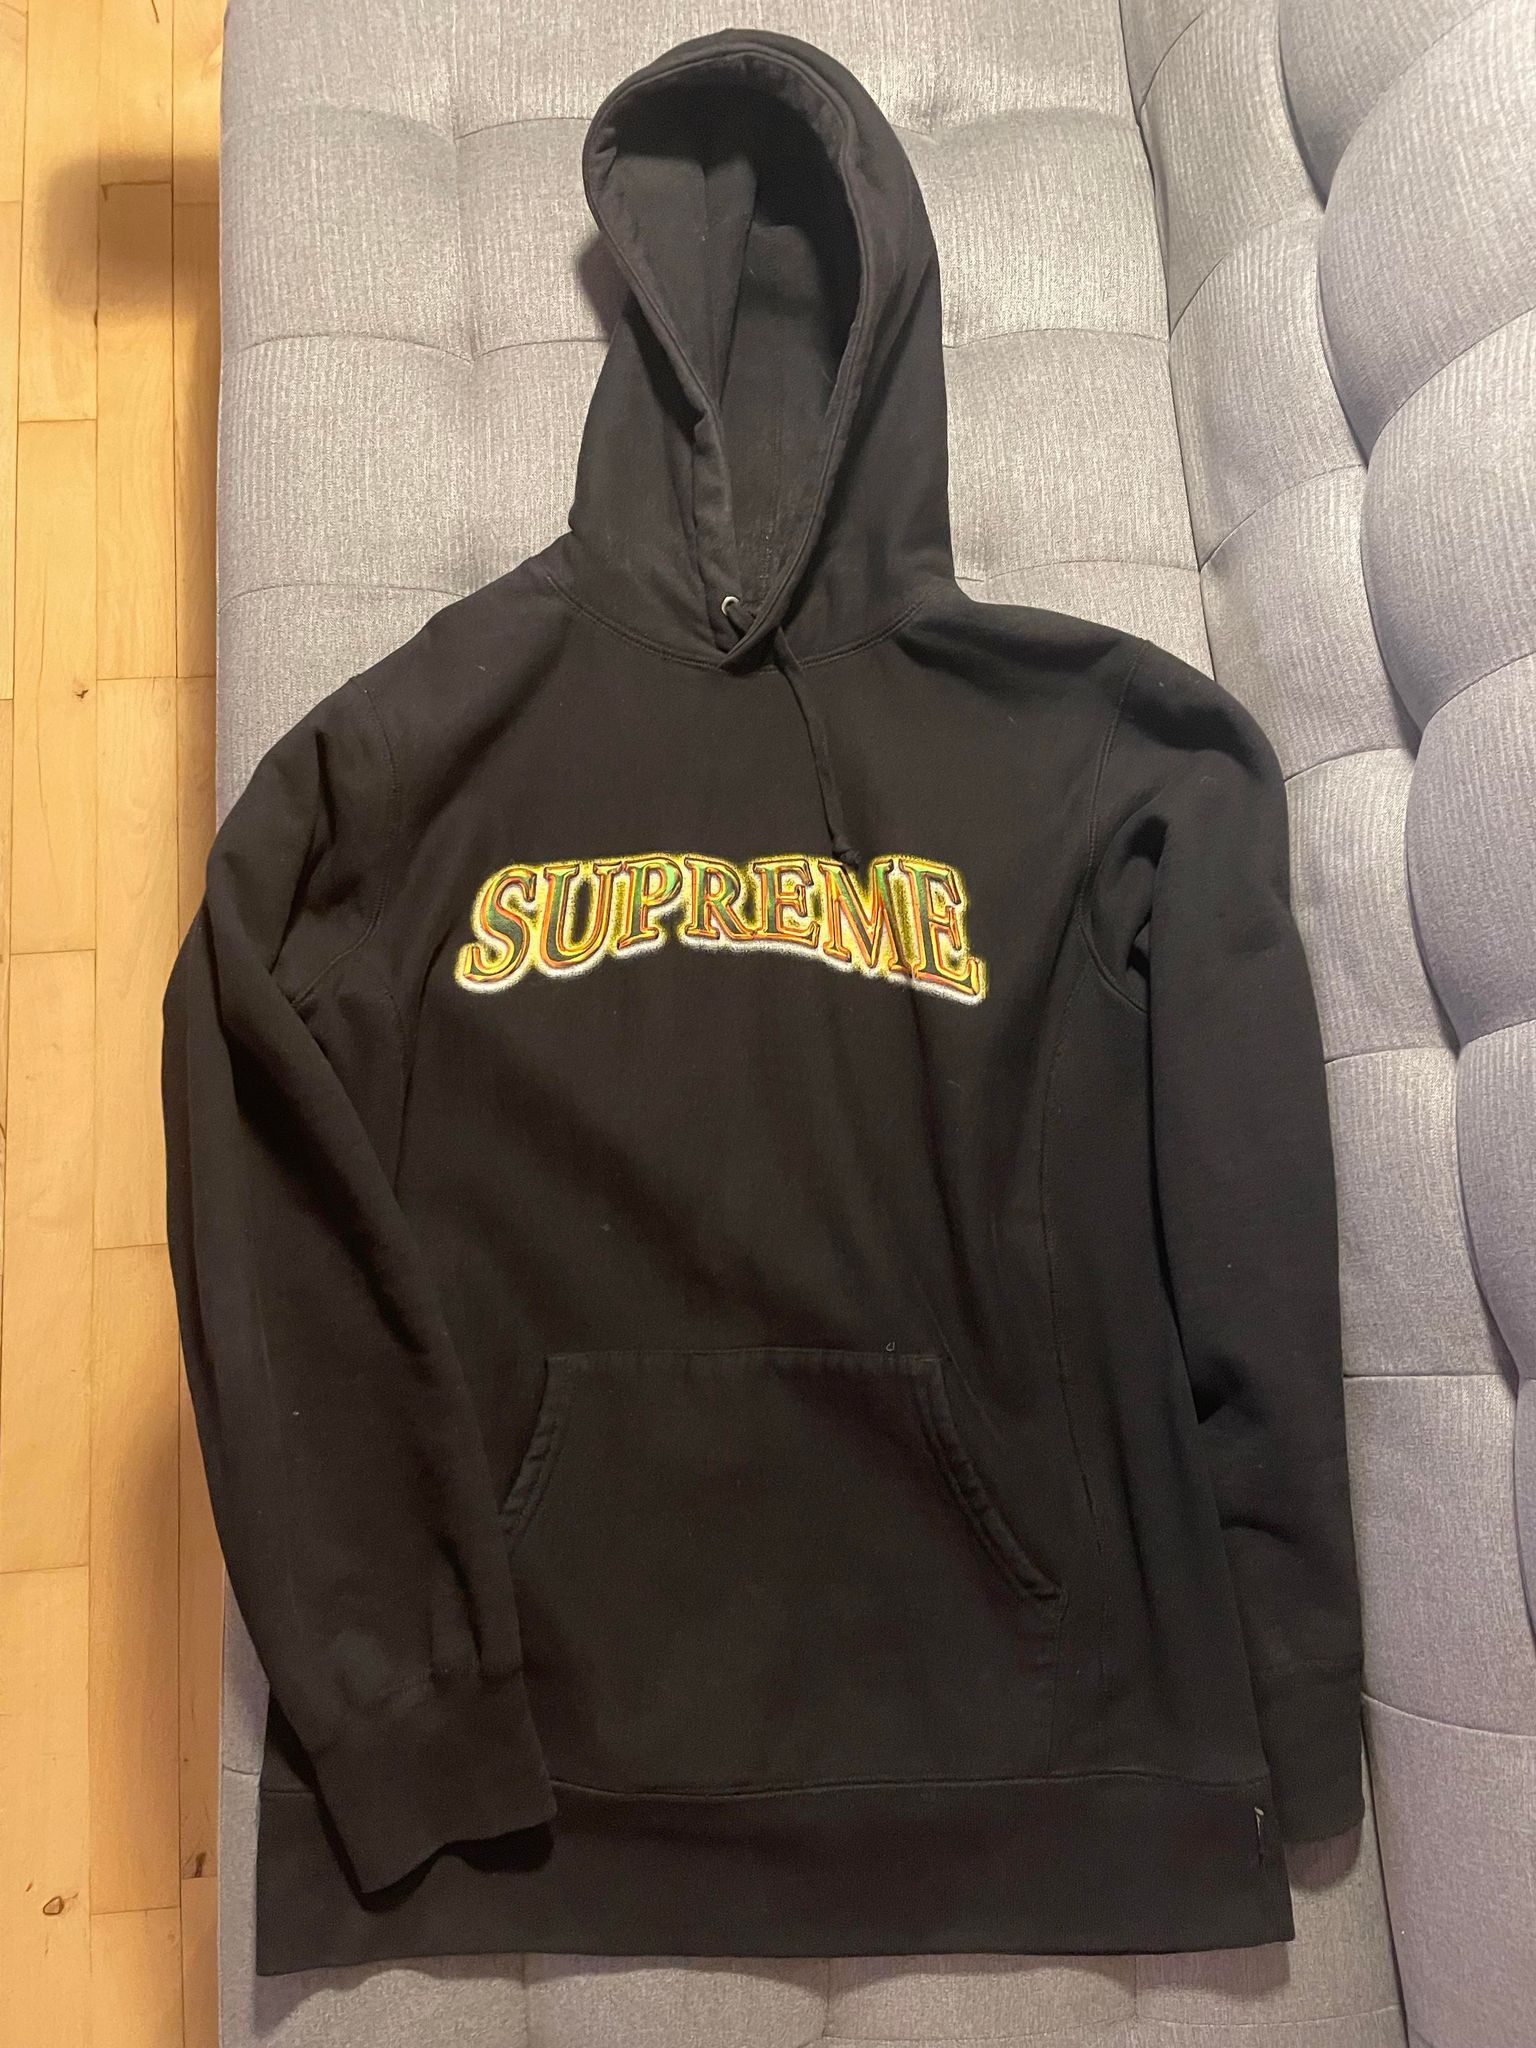 Supreme Supreme metallic arc logo hoodie | Grailed